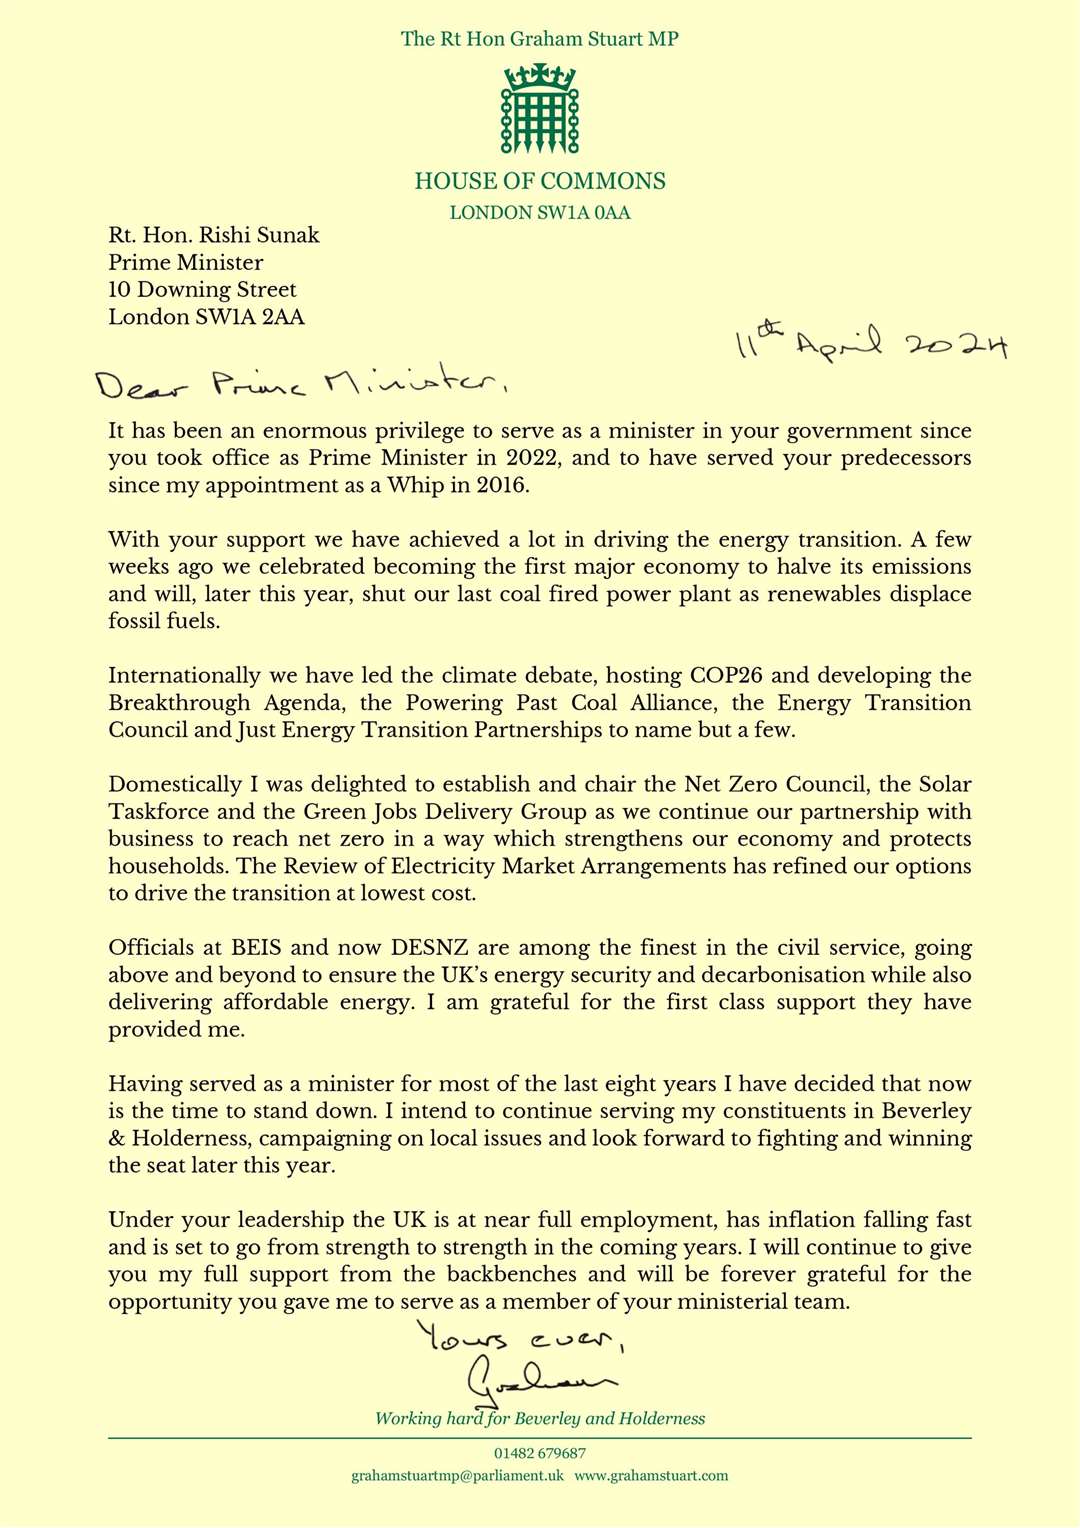 Graham Stuart’s resignation letter addressed to Prime Minister Rishi Sunak (Graham Stuart/PA)